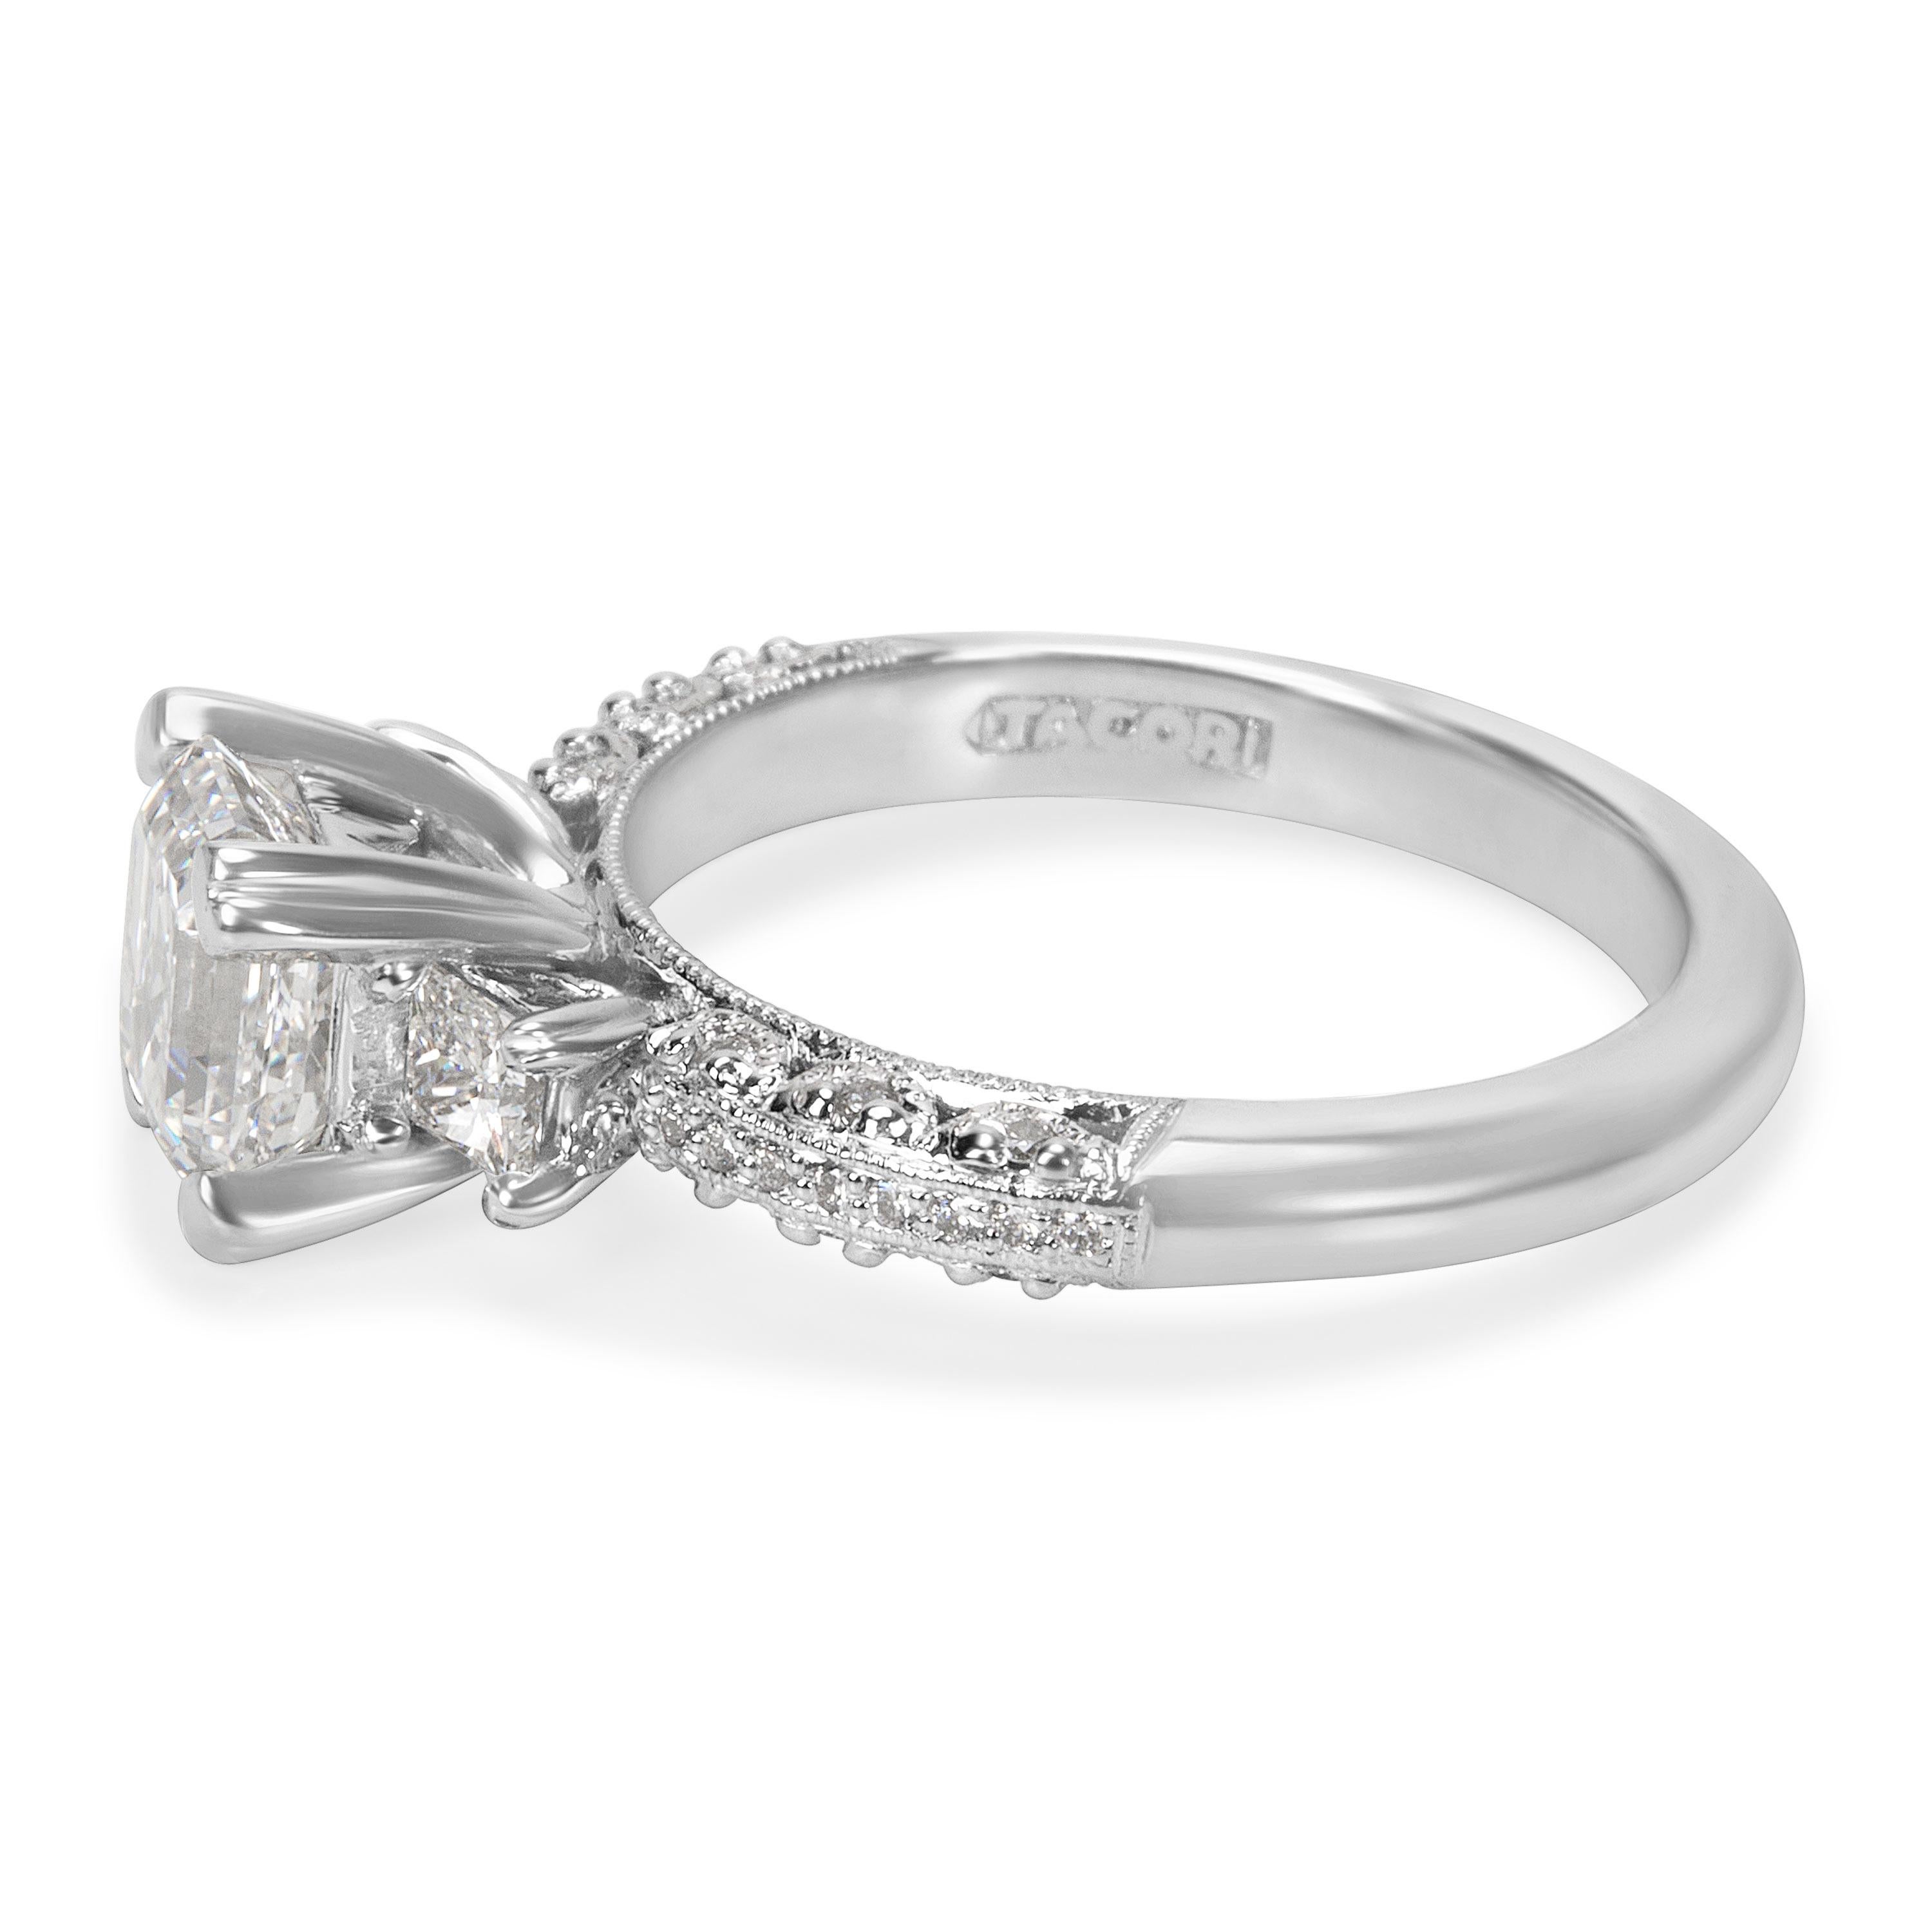 Women's GIA Certified Tacori Diamond Engagement Ring in Platinum 1.93 Carat F VS1